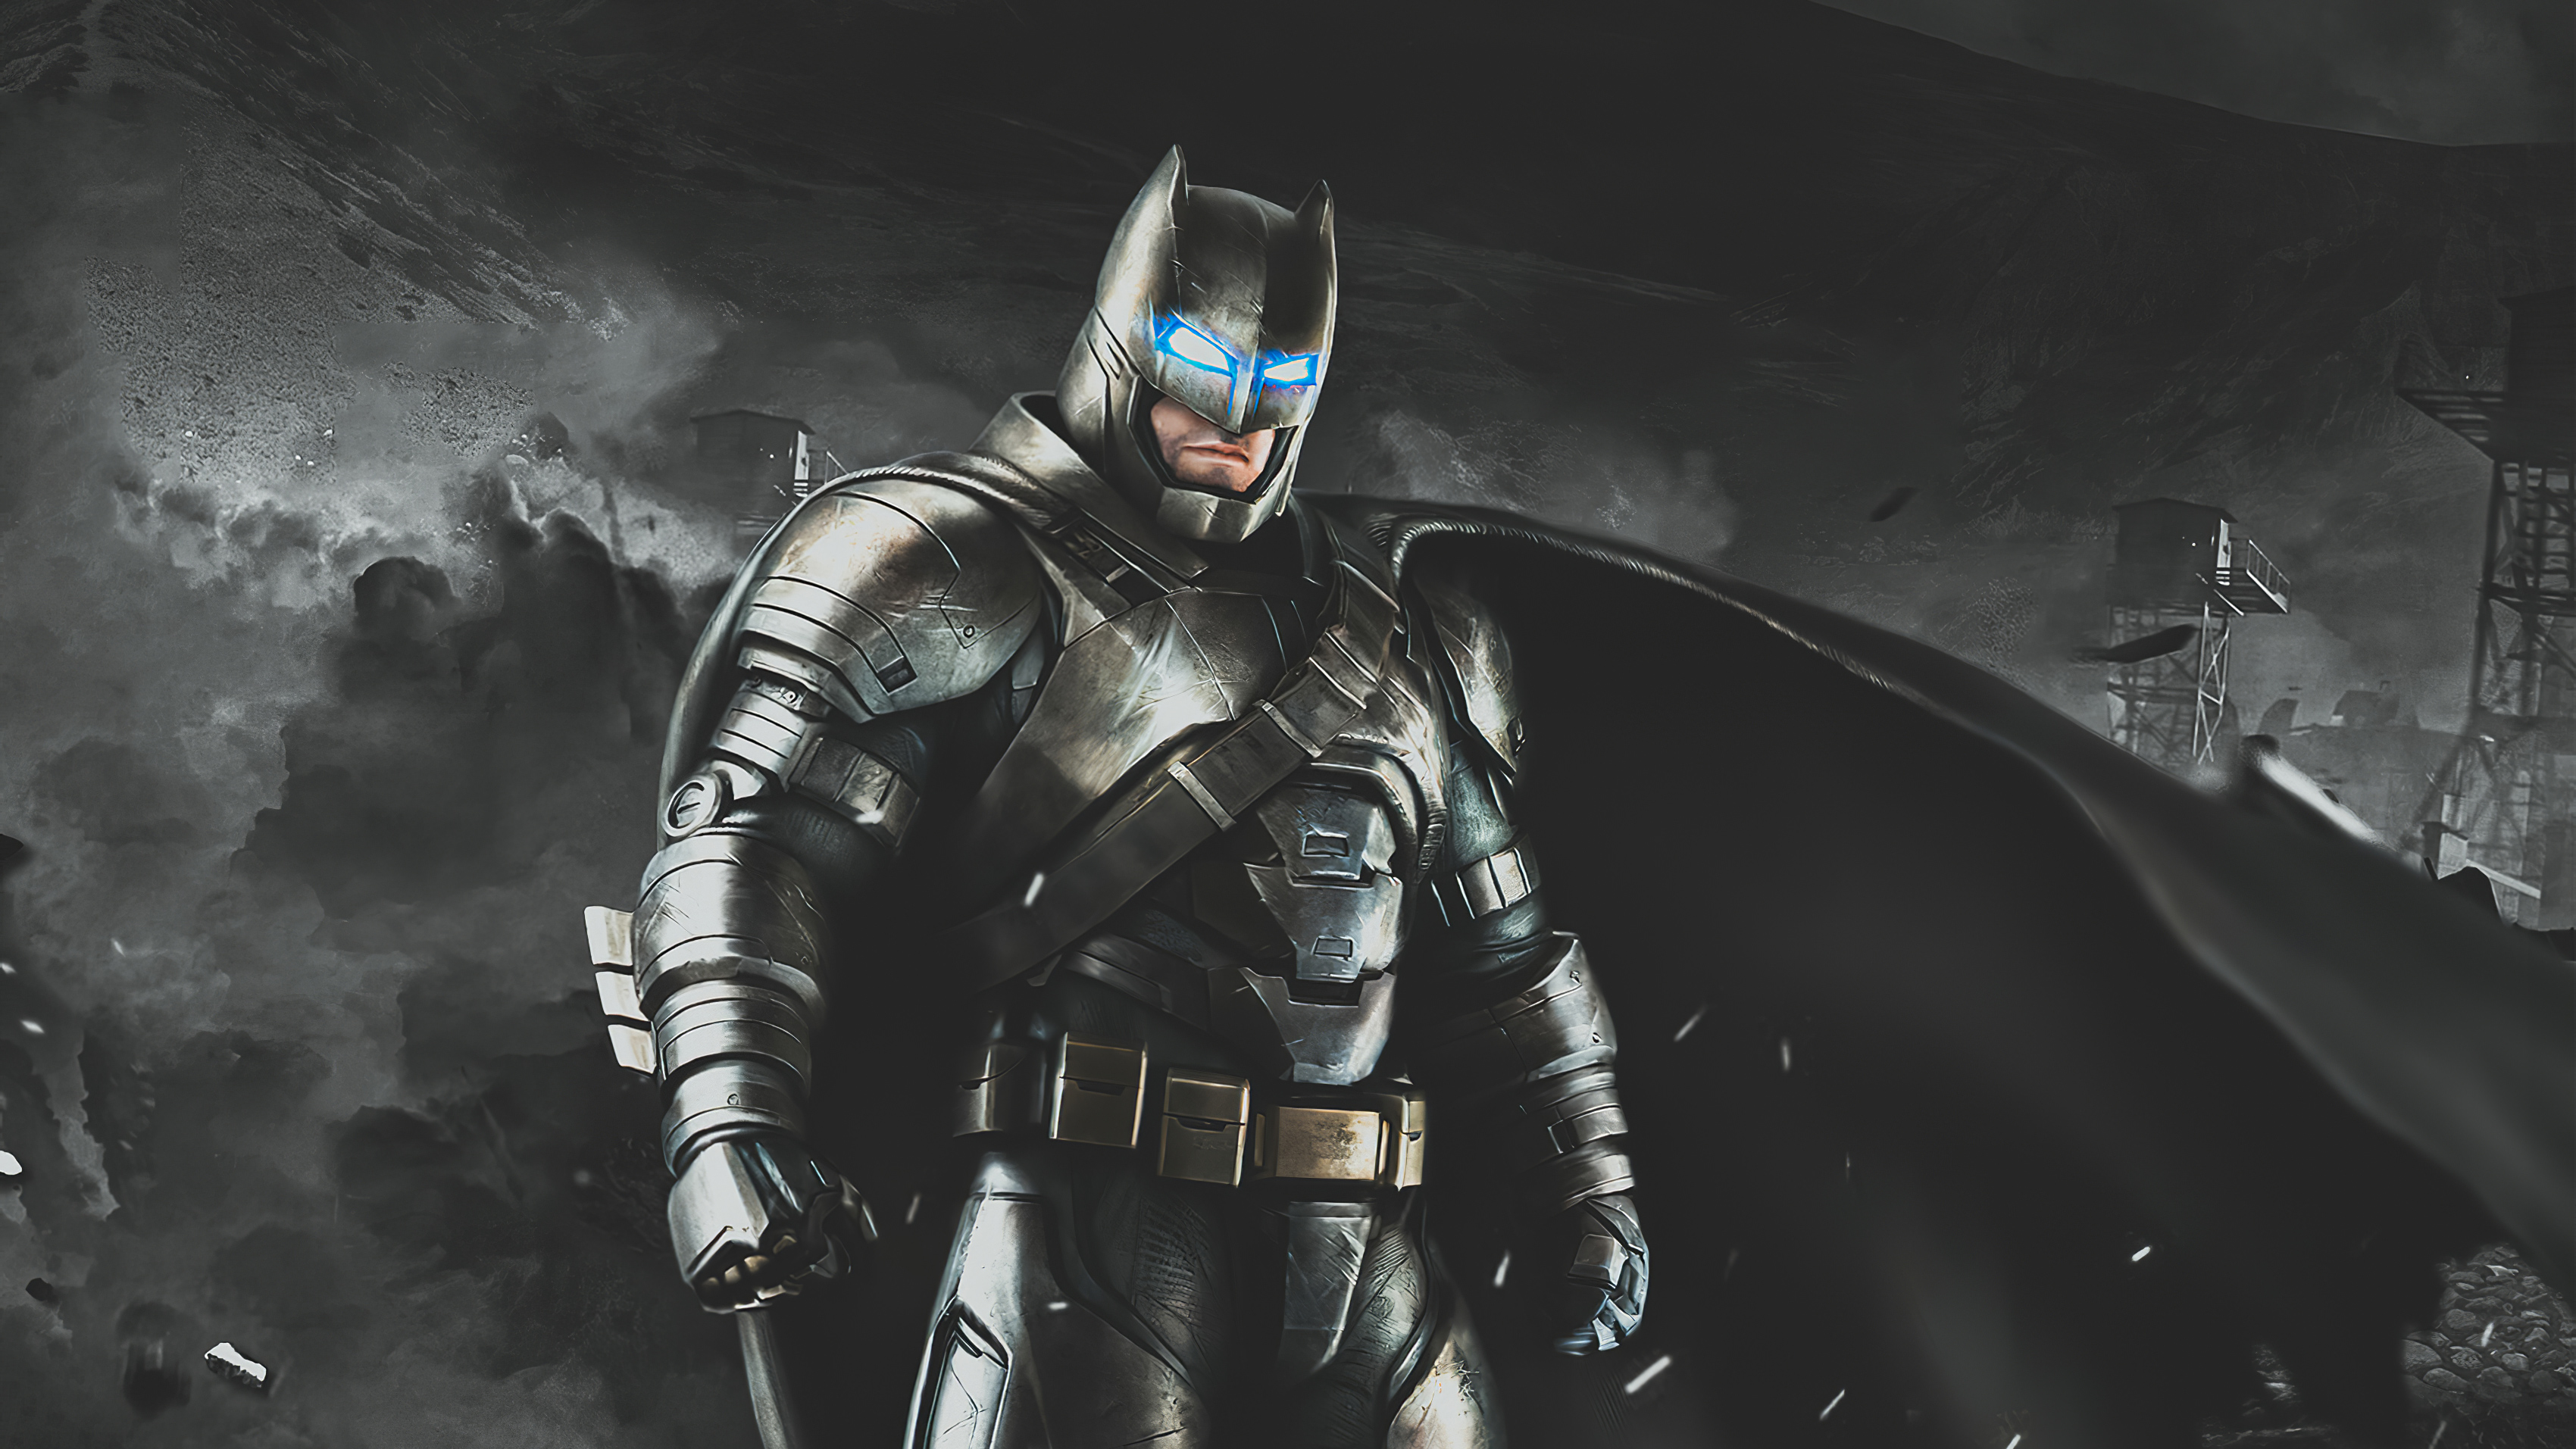 New Batman Suit 4K Wallpapers